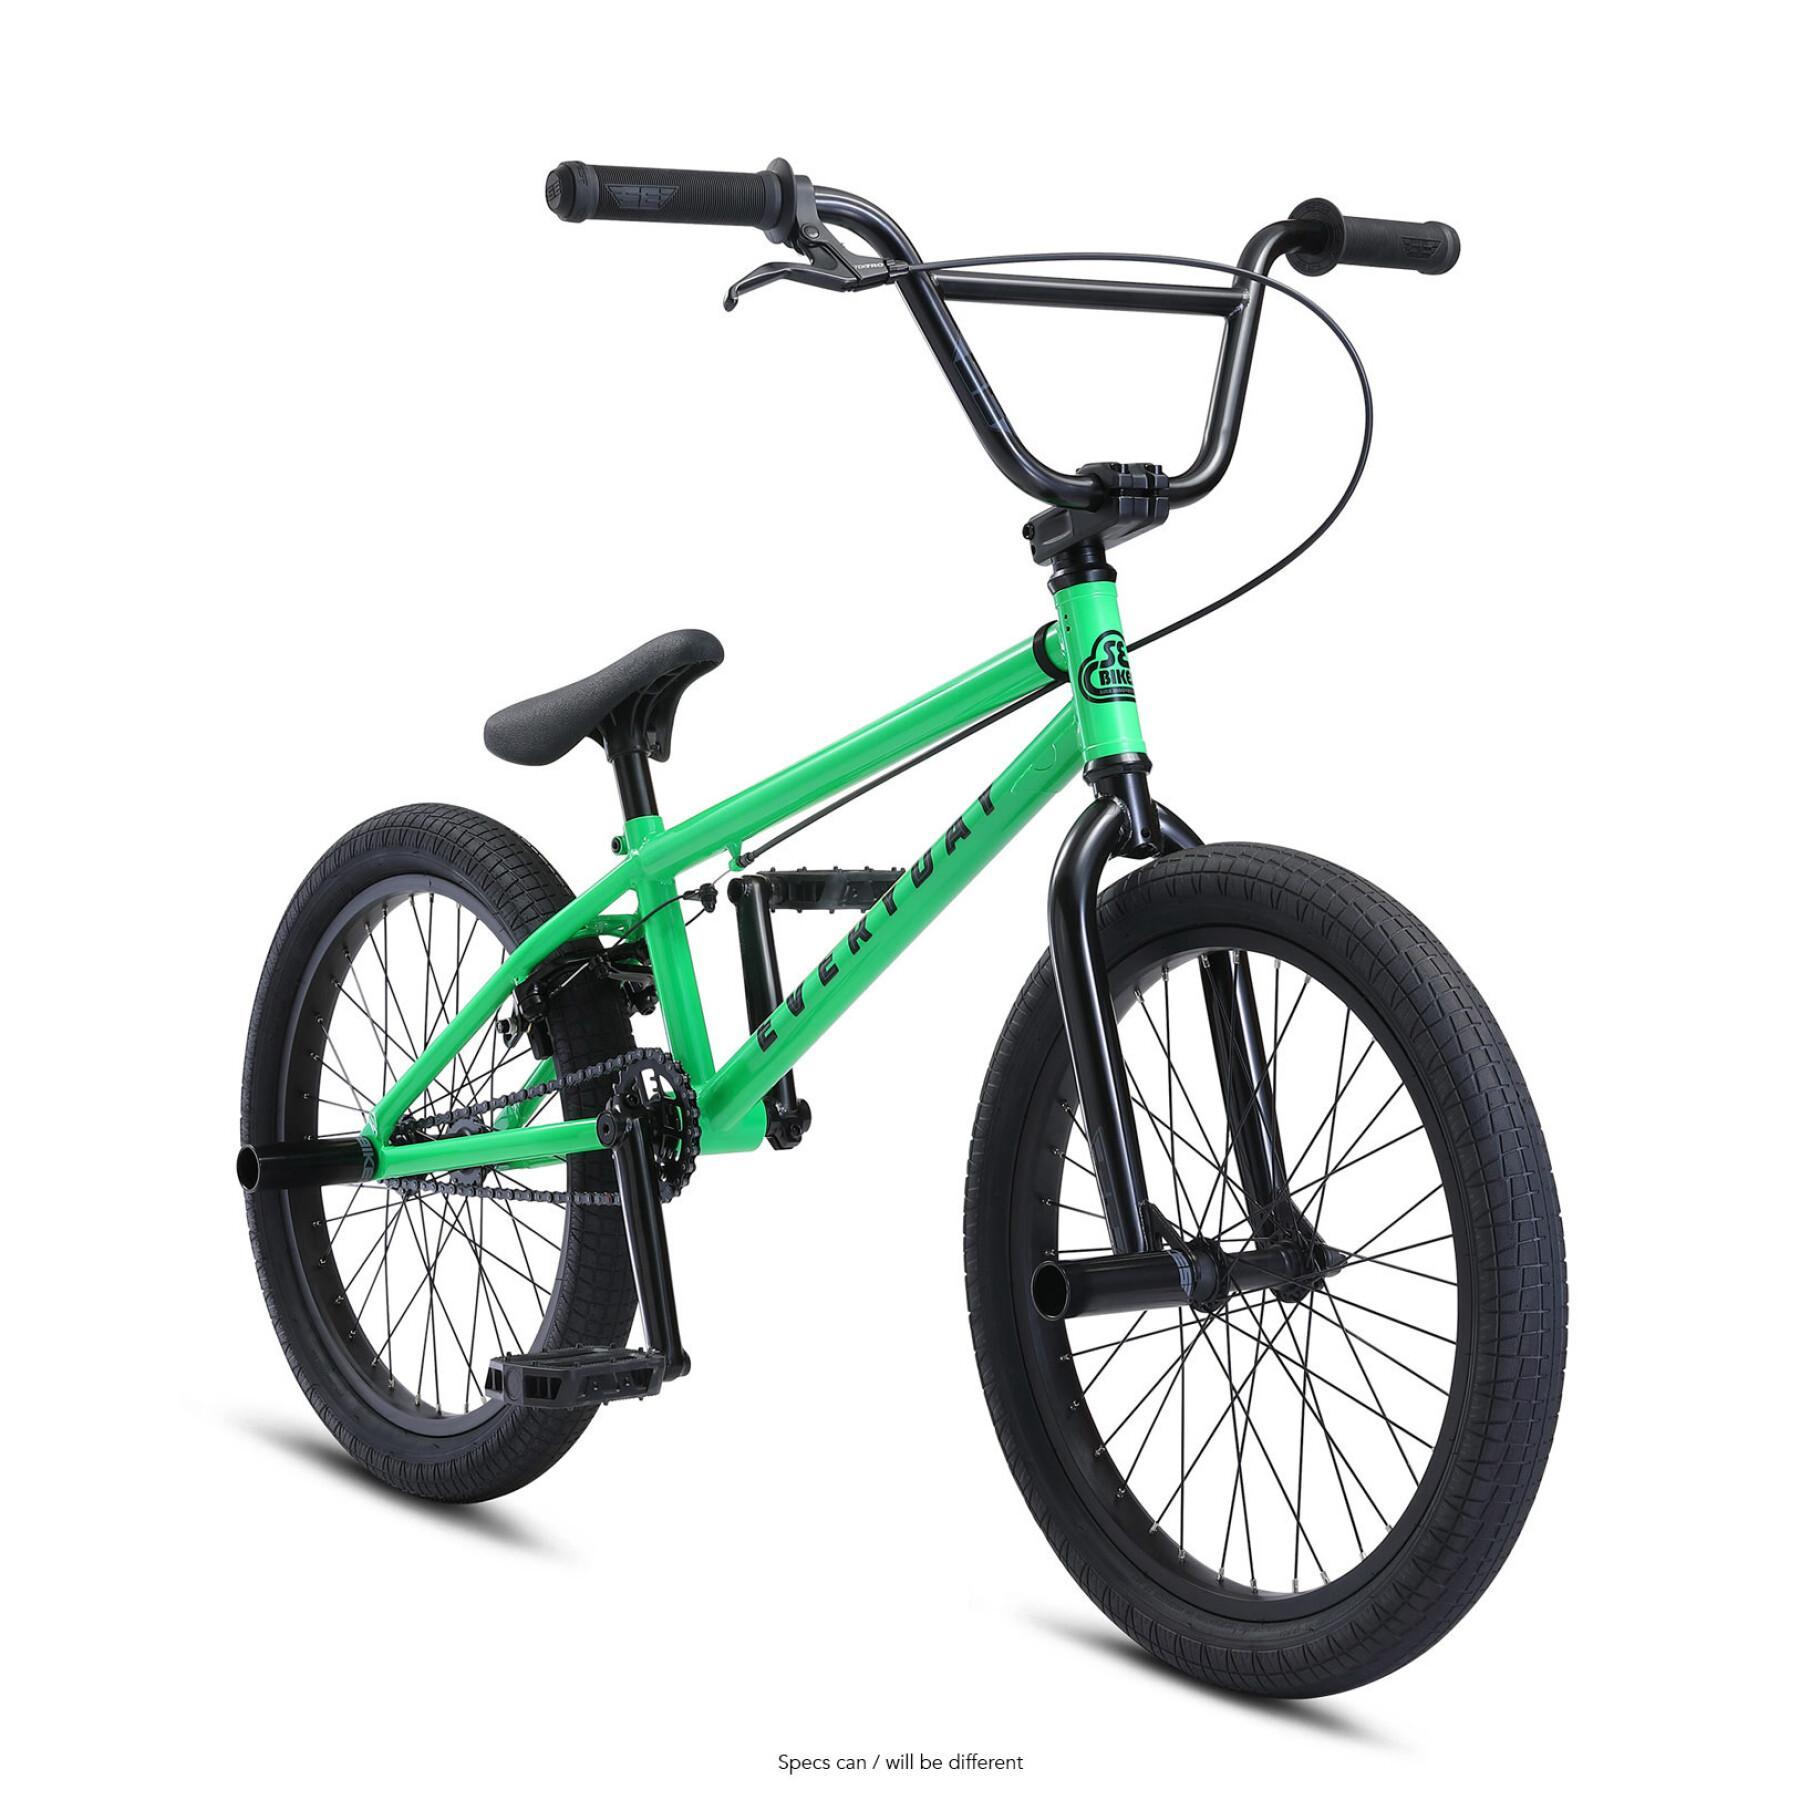 Bicicletta SE Bikes Everyday 2021 B-Merchandise